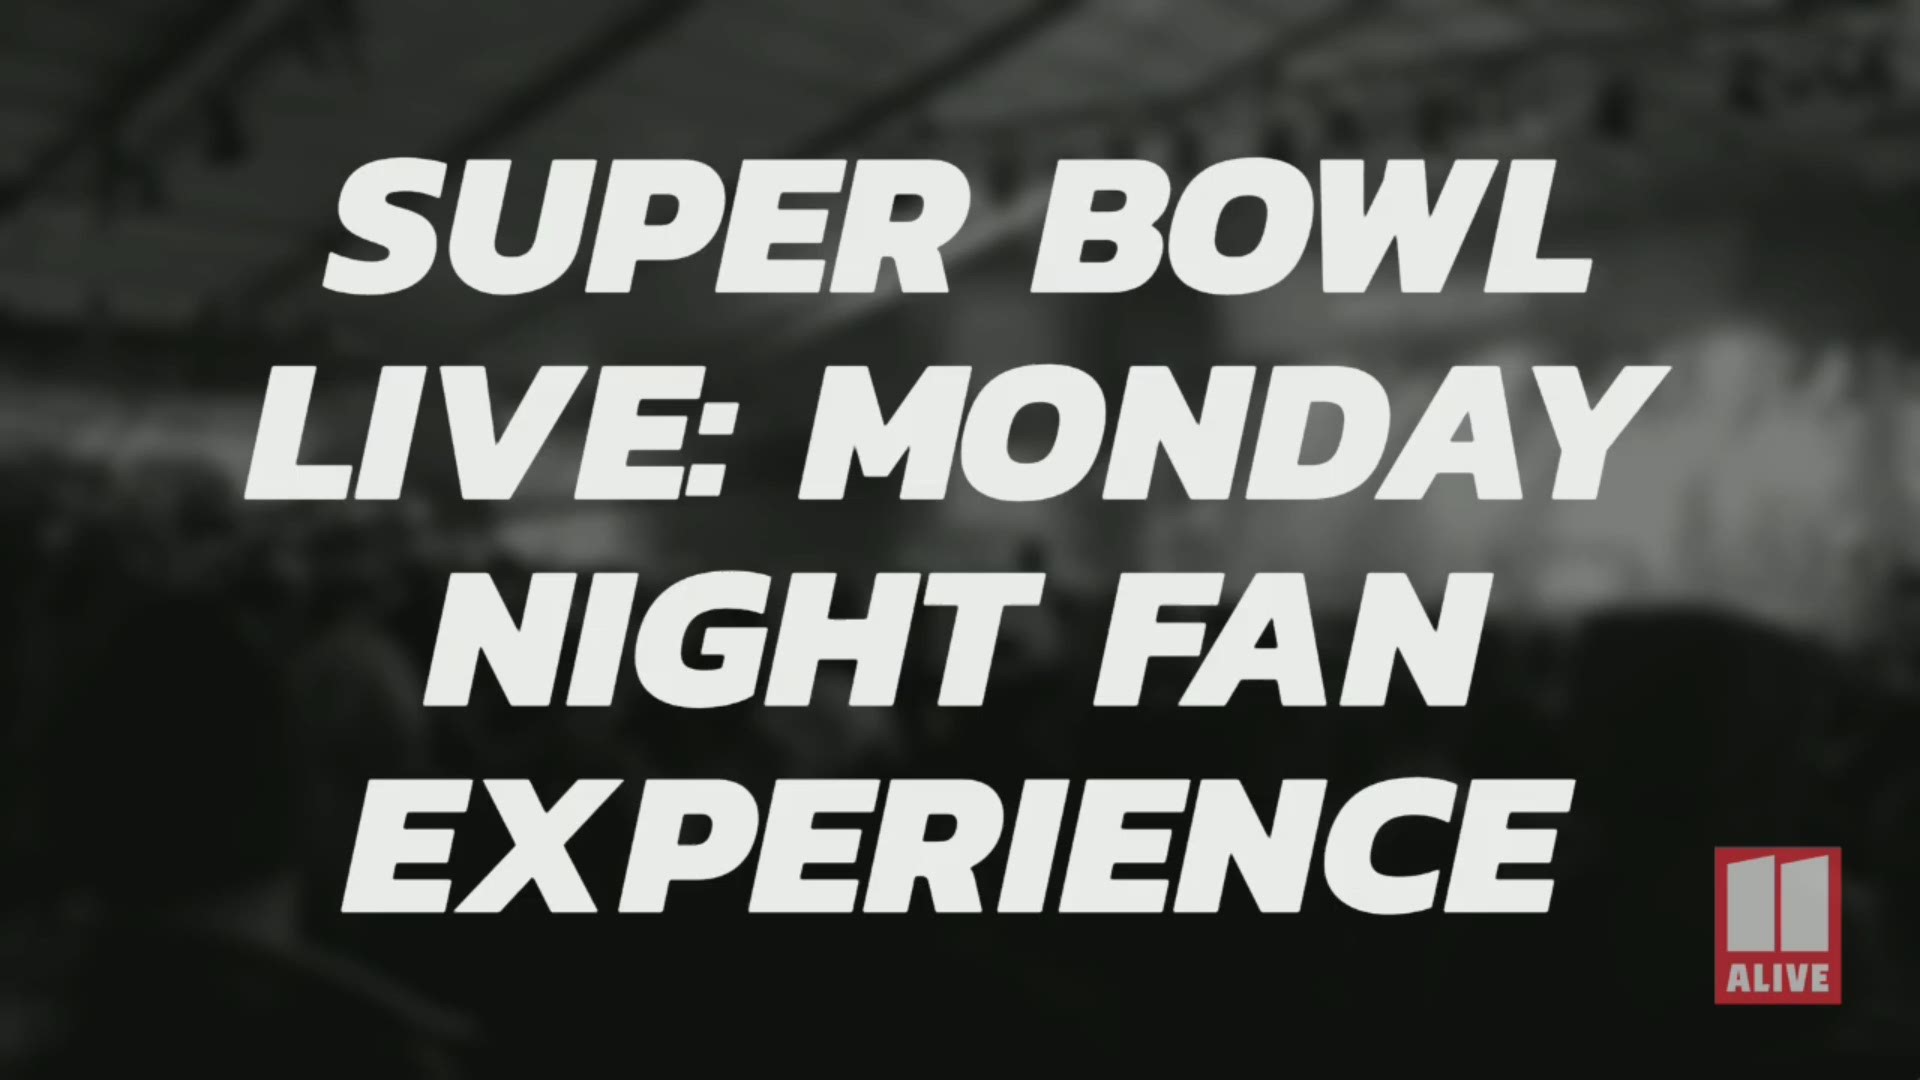 The Super Bowl Live concert had a massive turnout Monday night.